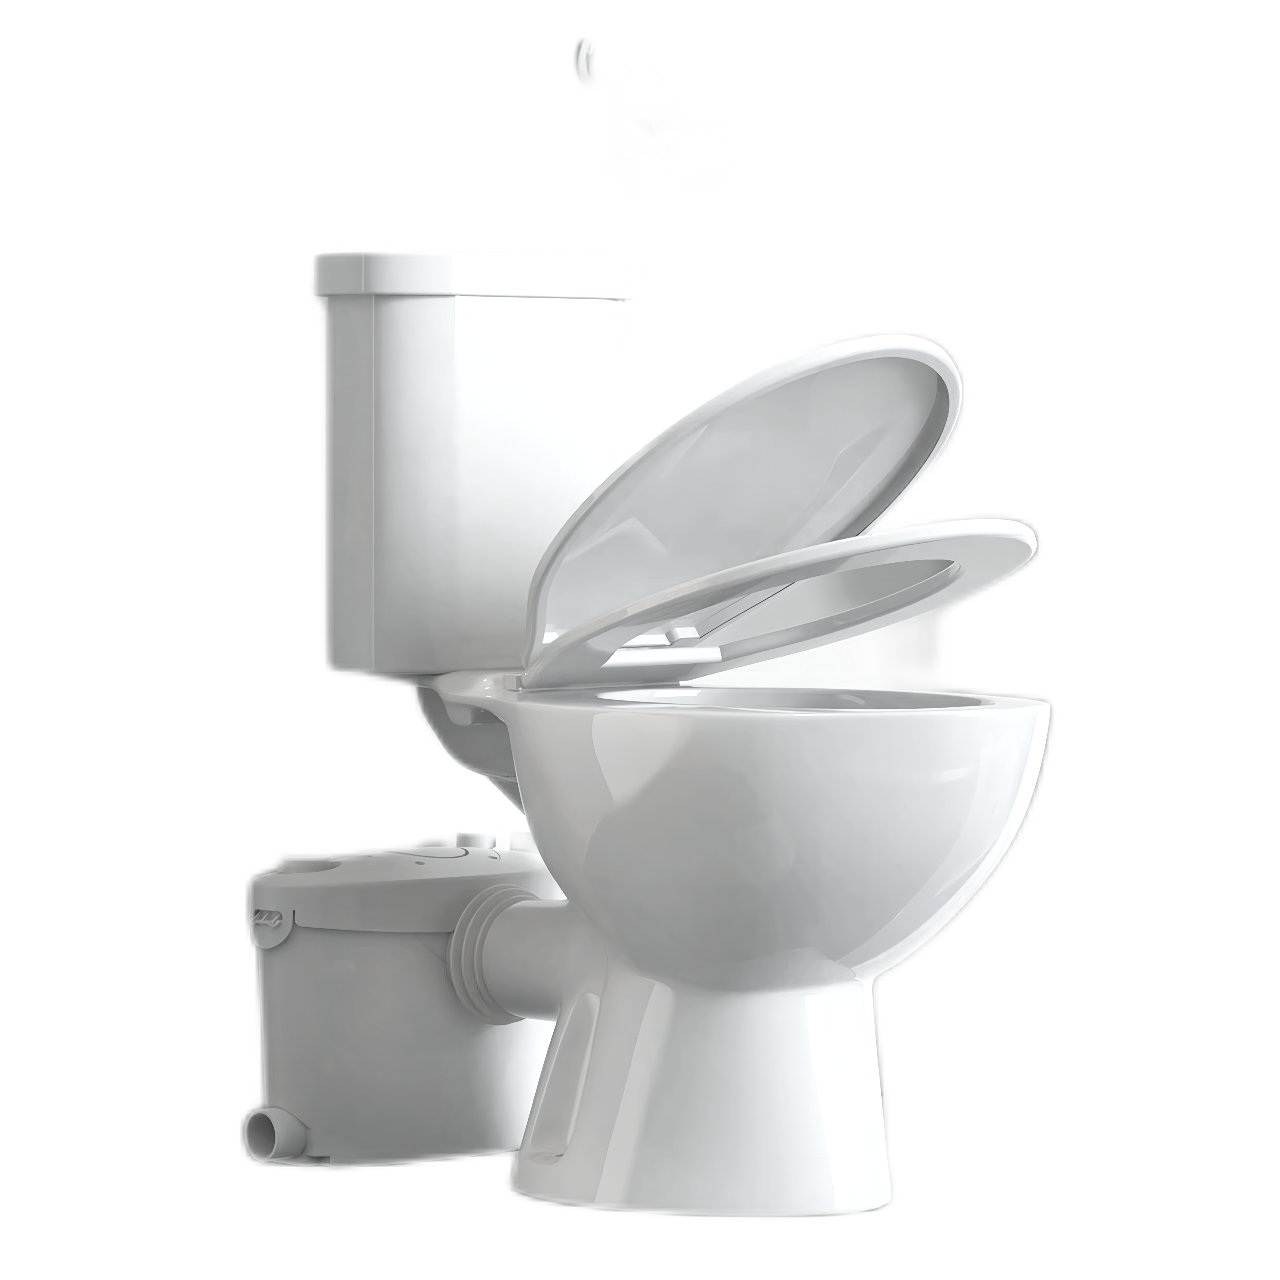 SUPERFLO Bathroom Toilet with 600W Macerator Pump, Sewage Ejector